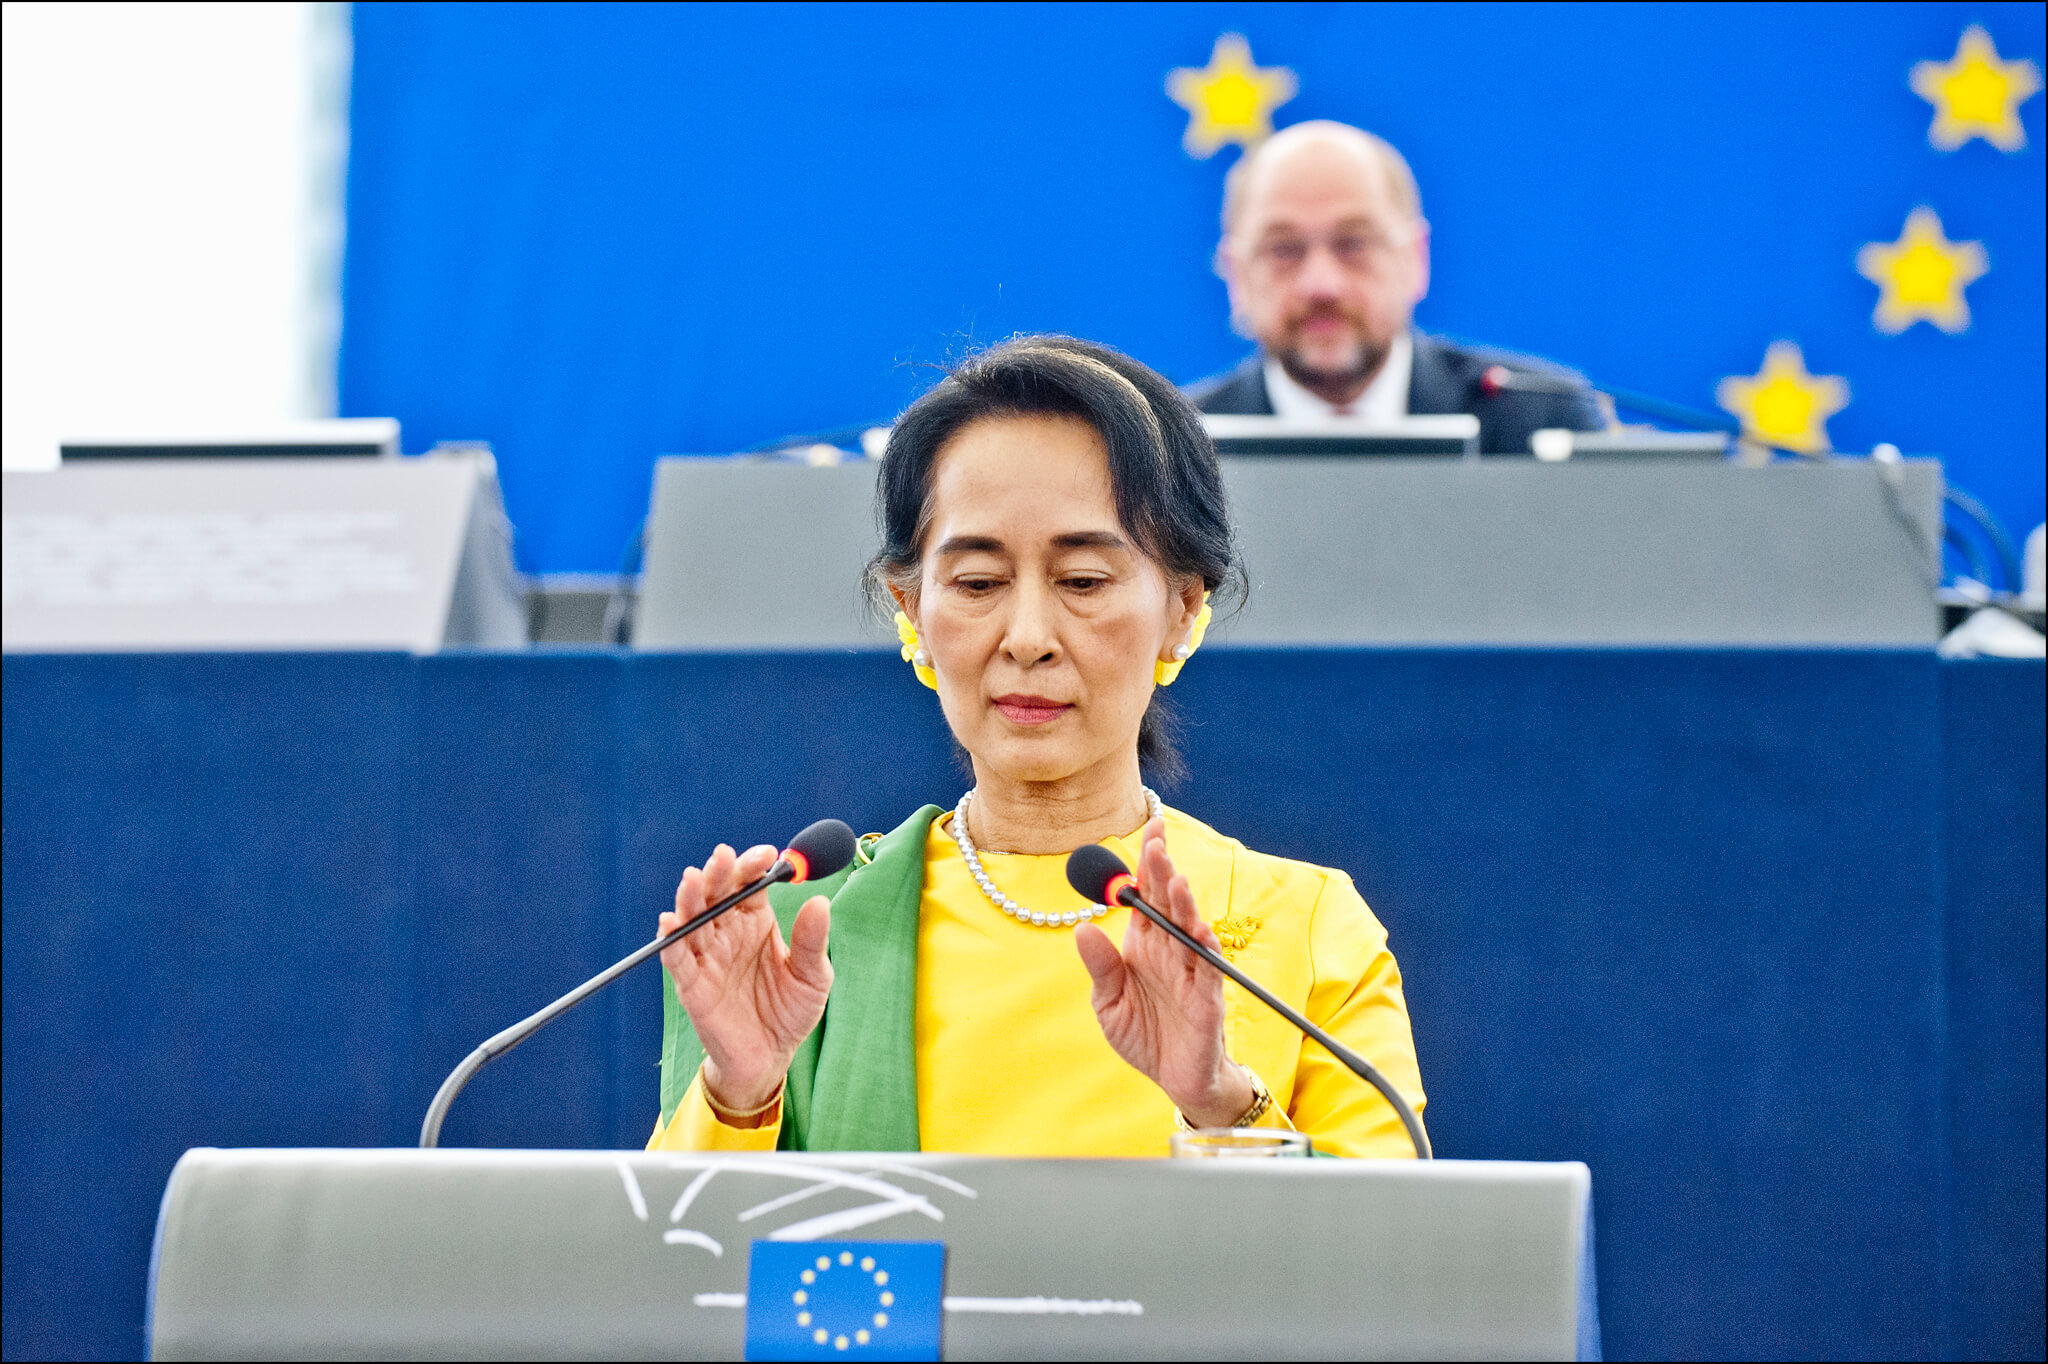 Mezzera - Aung San Suu Kyi addresses the Members of the European Parliament in 2013. European Union 2013 - European Parliament